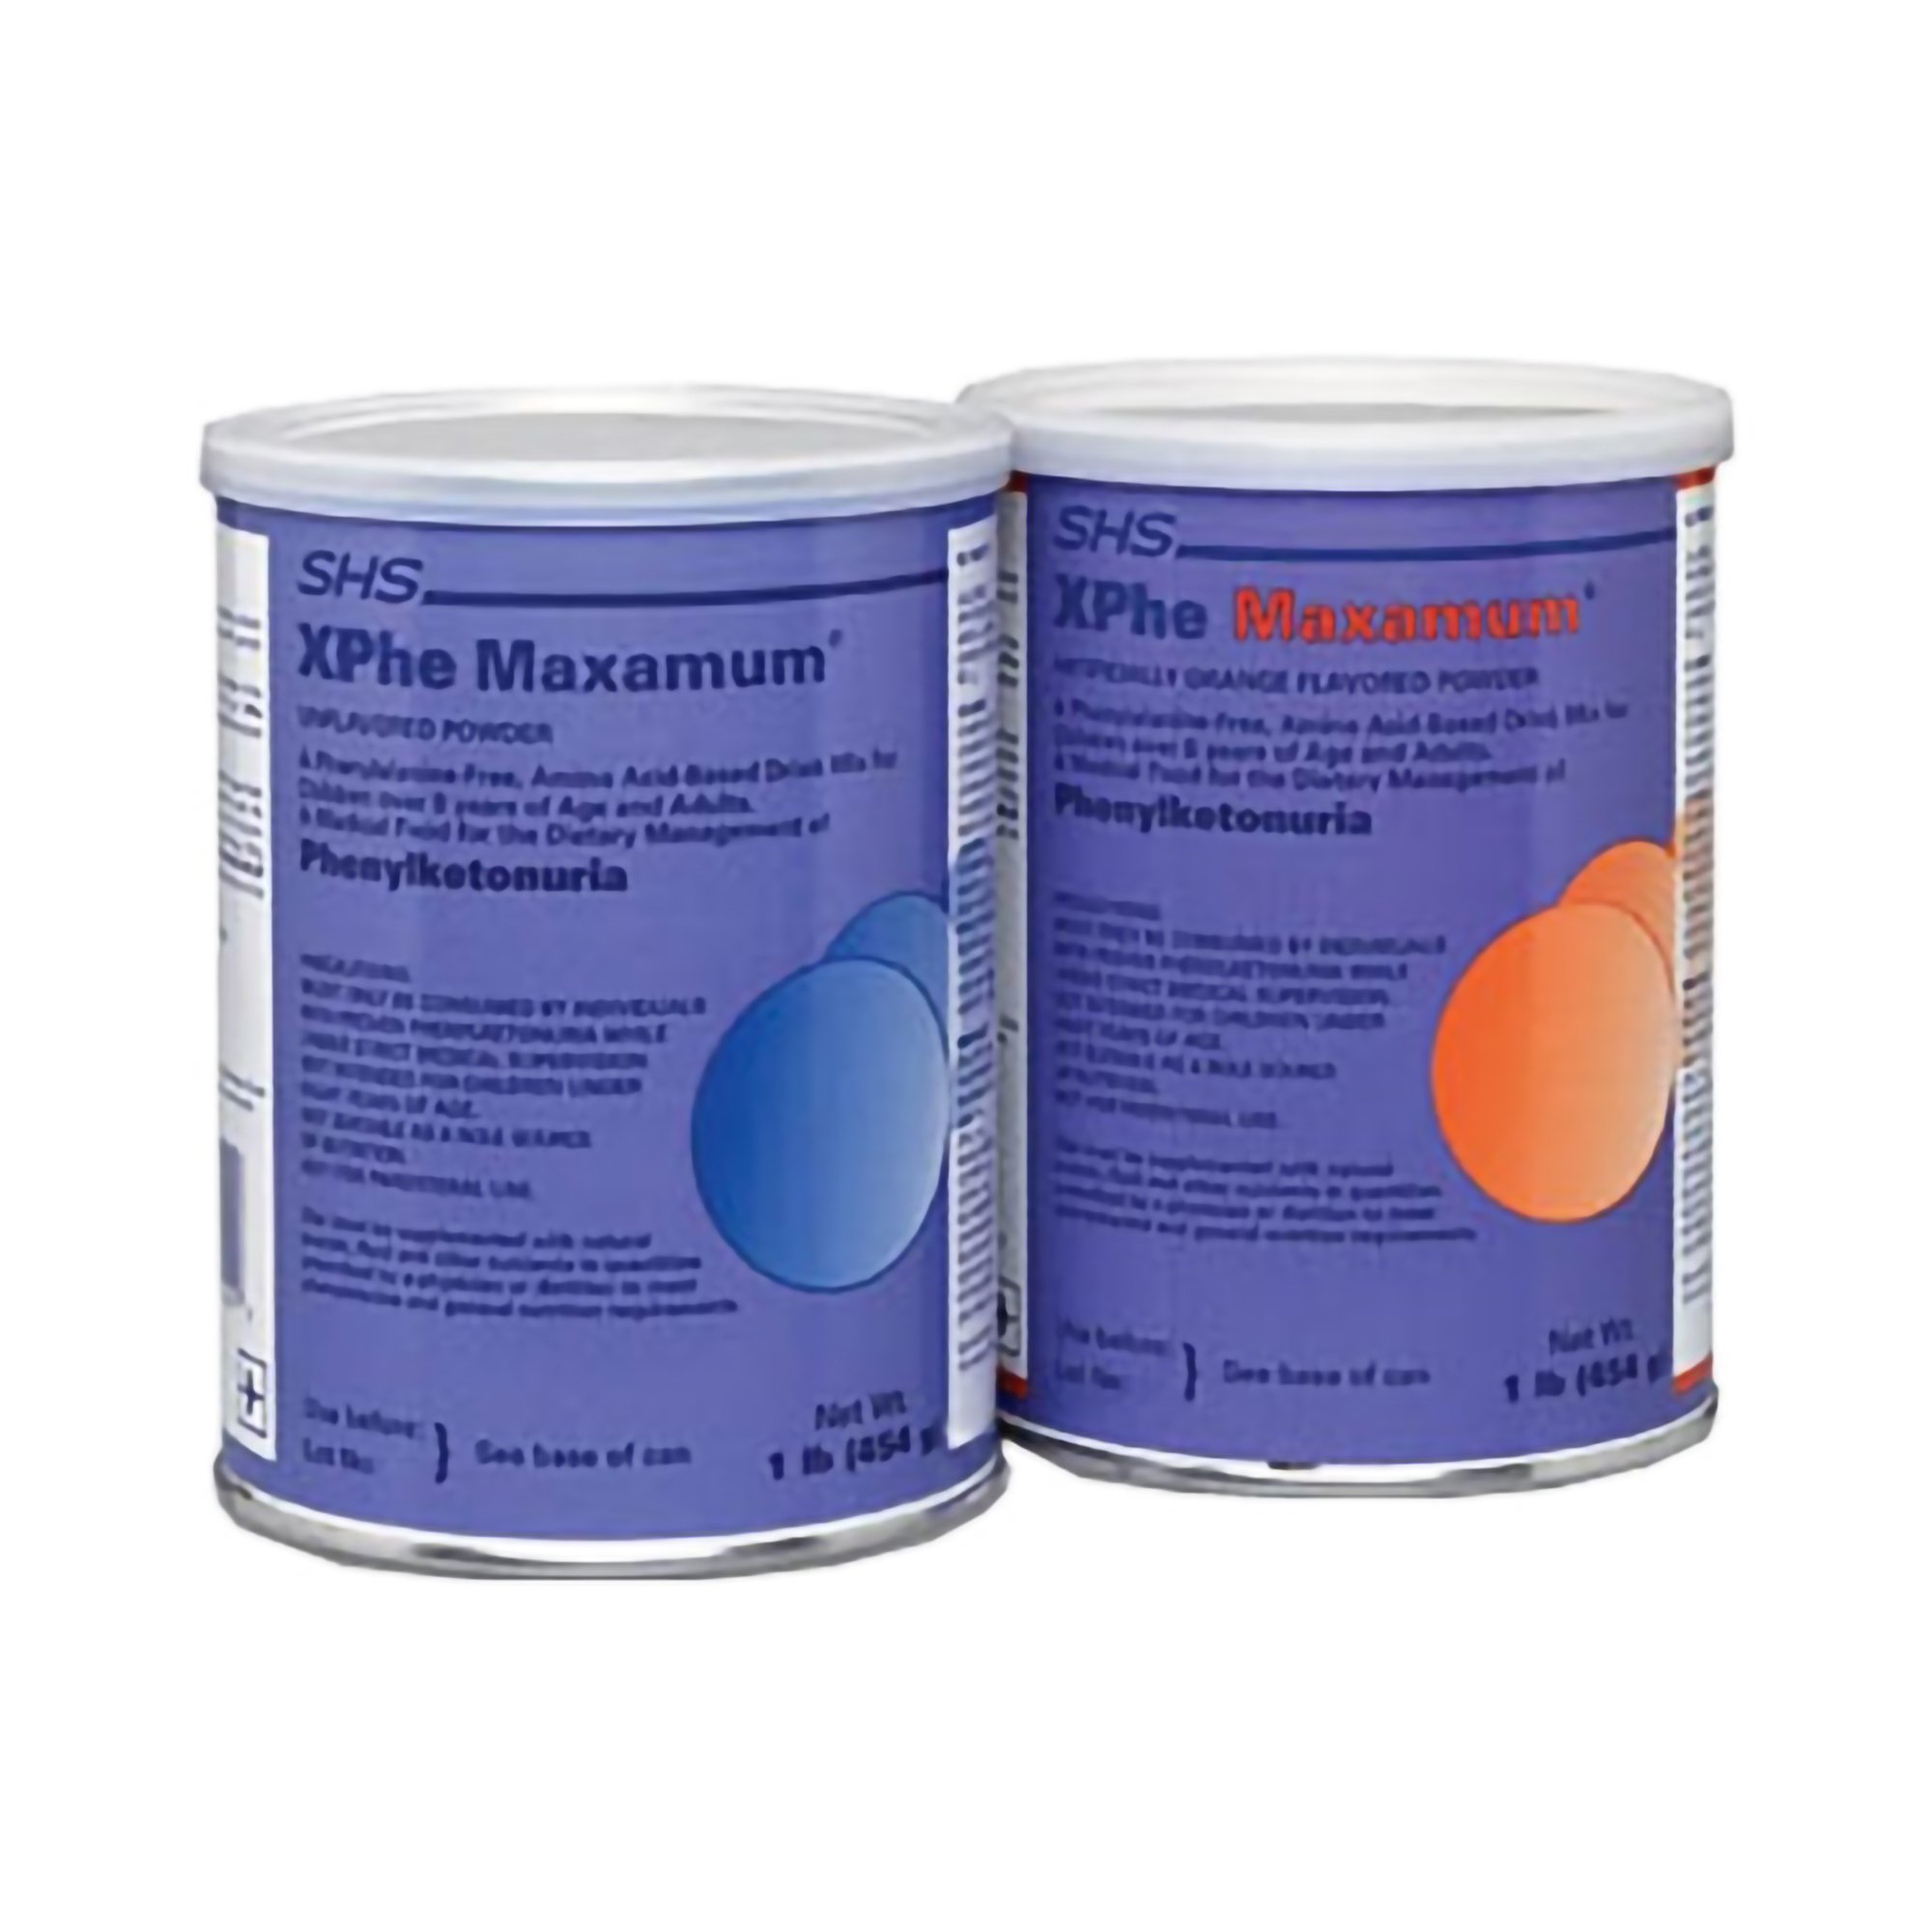 XPhe Maxamum Orange Flavor PKU Oral Supplement, 1 lb. Can